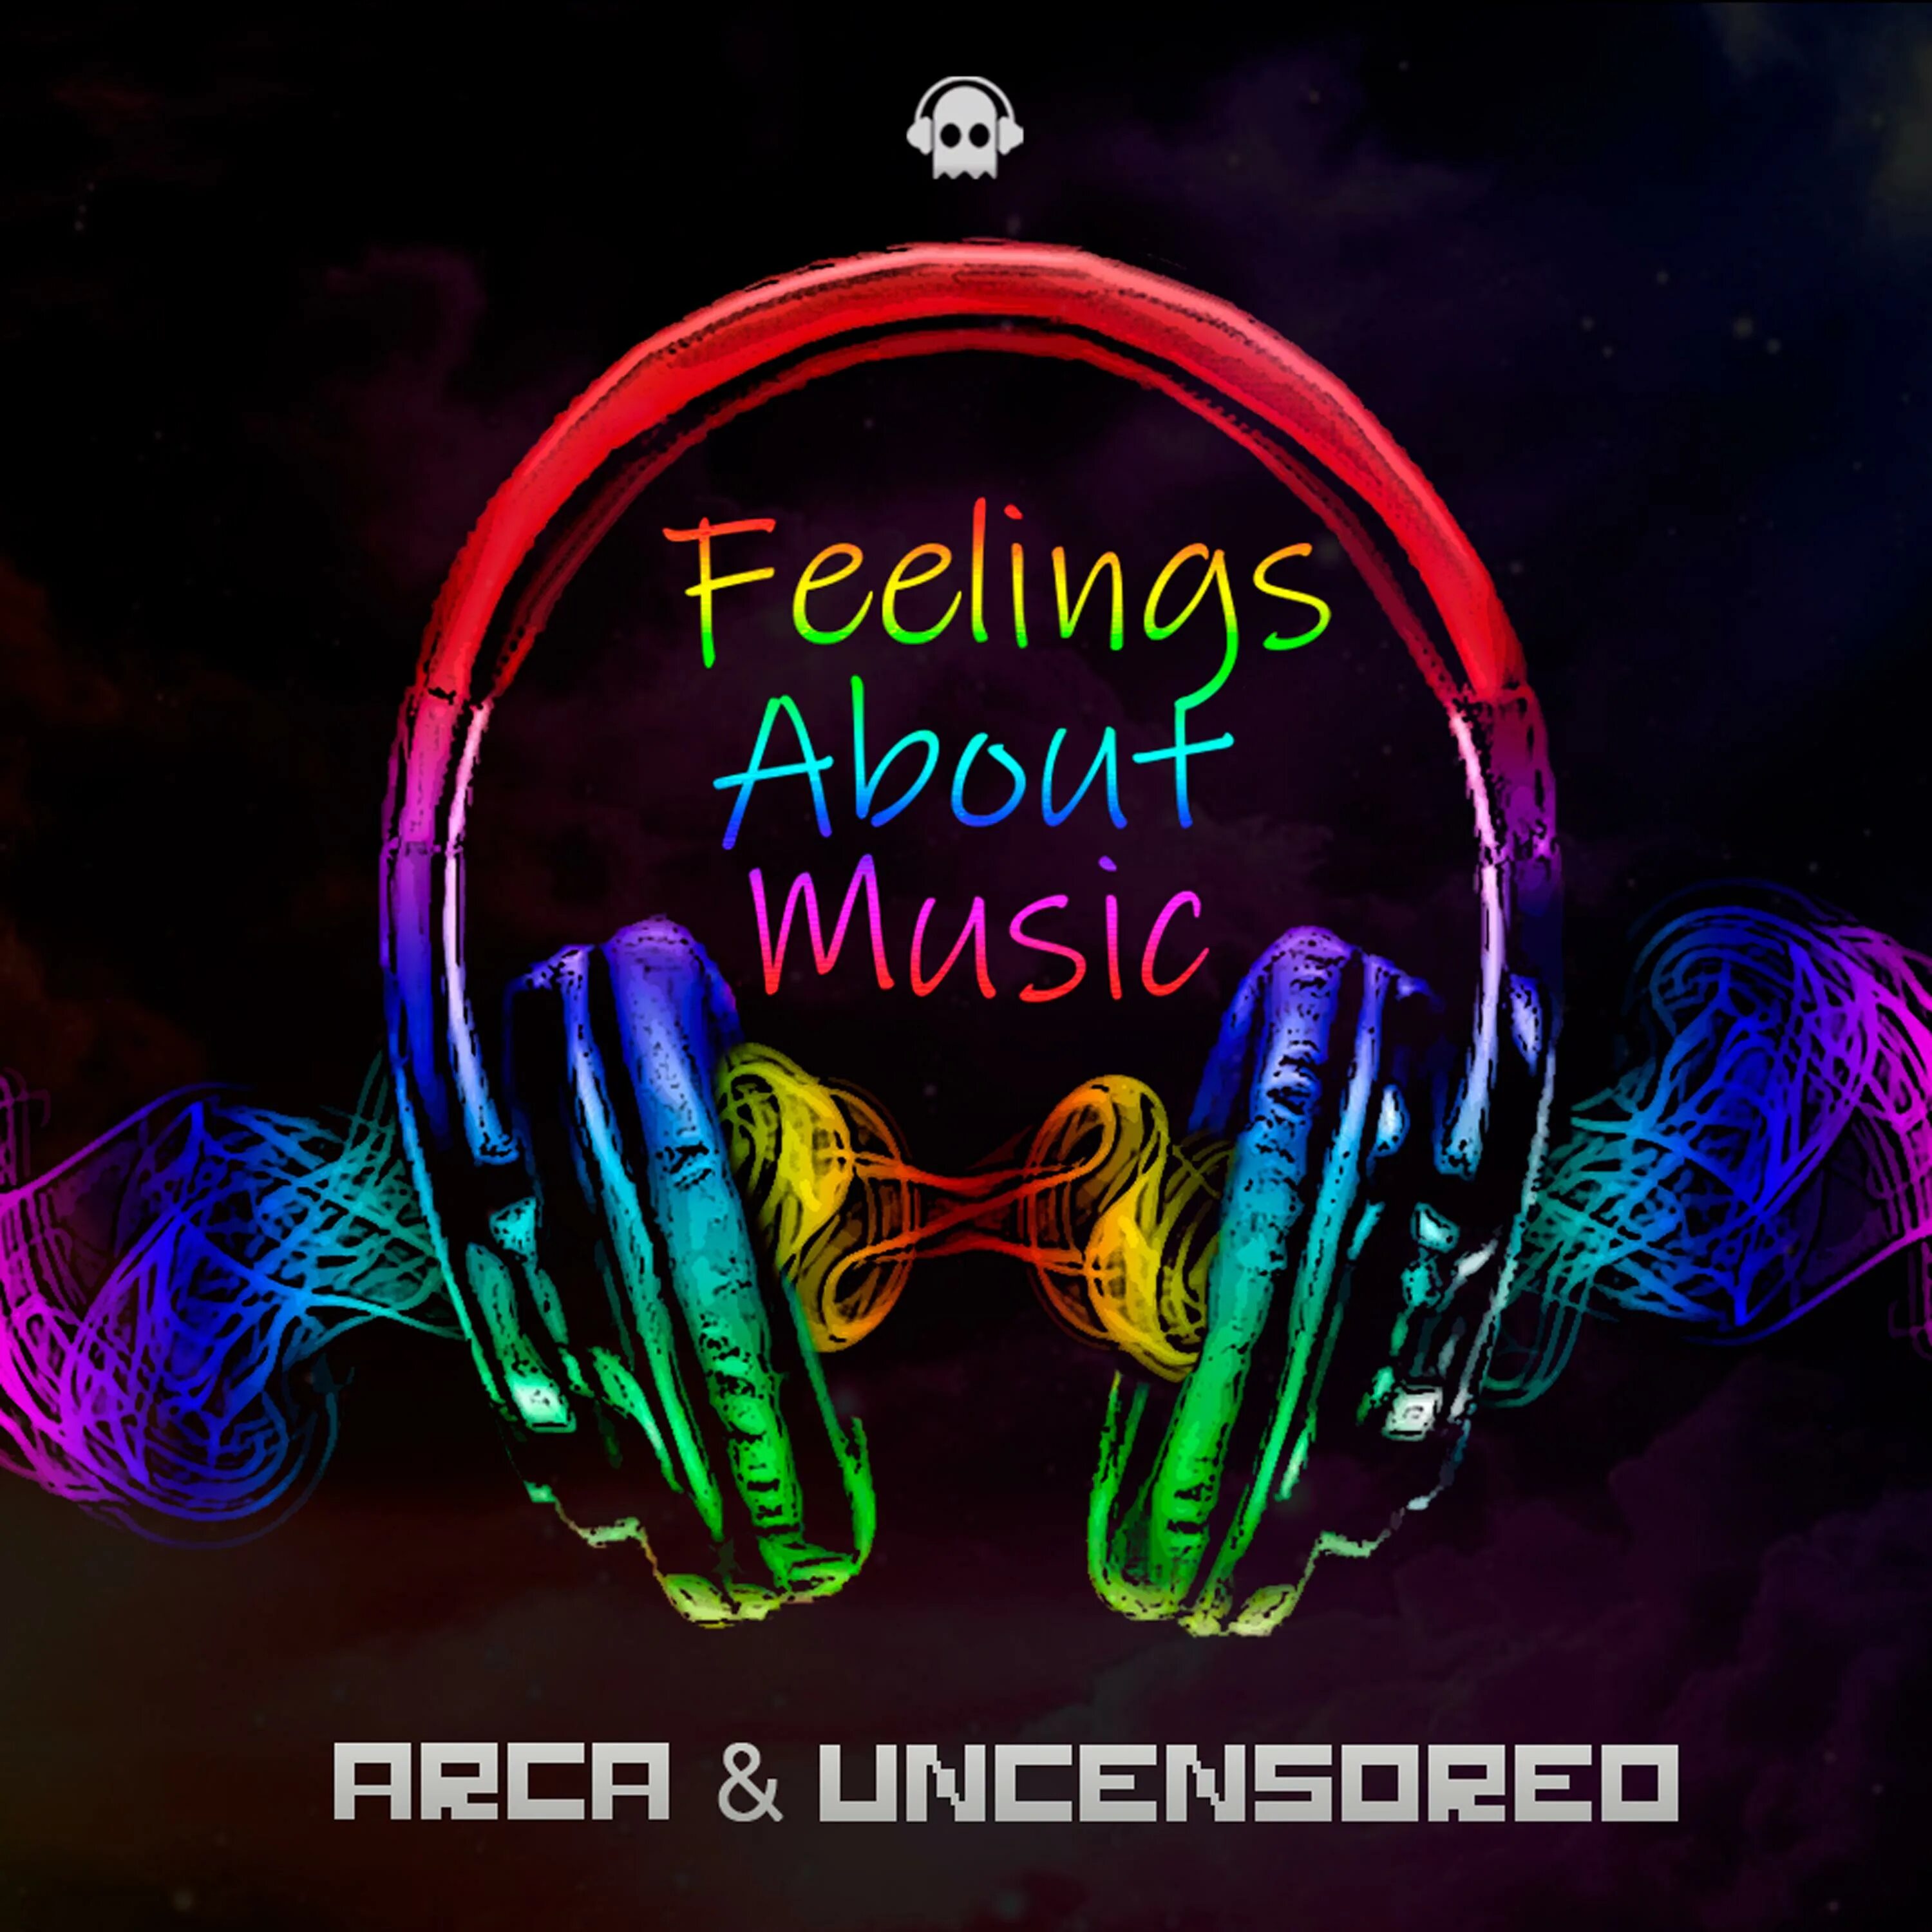 Arca 2019 Music. About Music. Feel музыка. Music feelings.